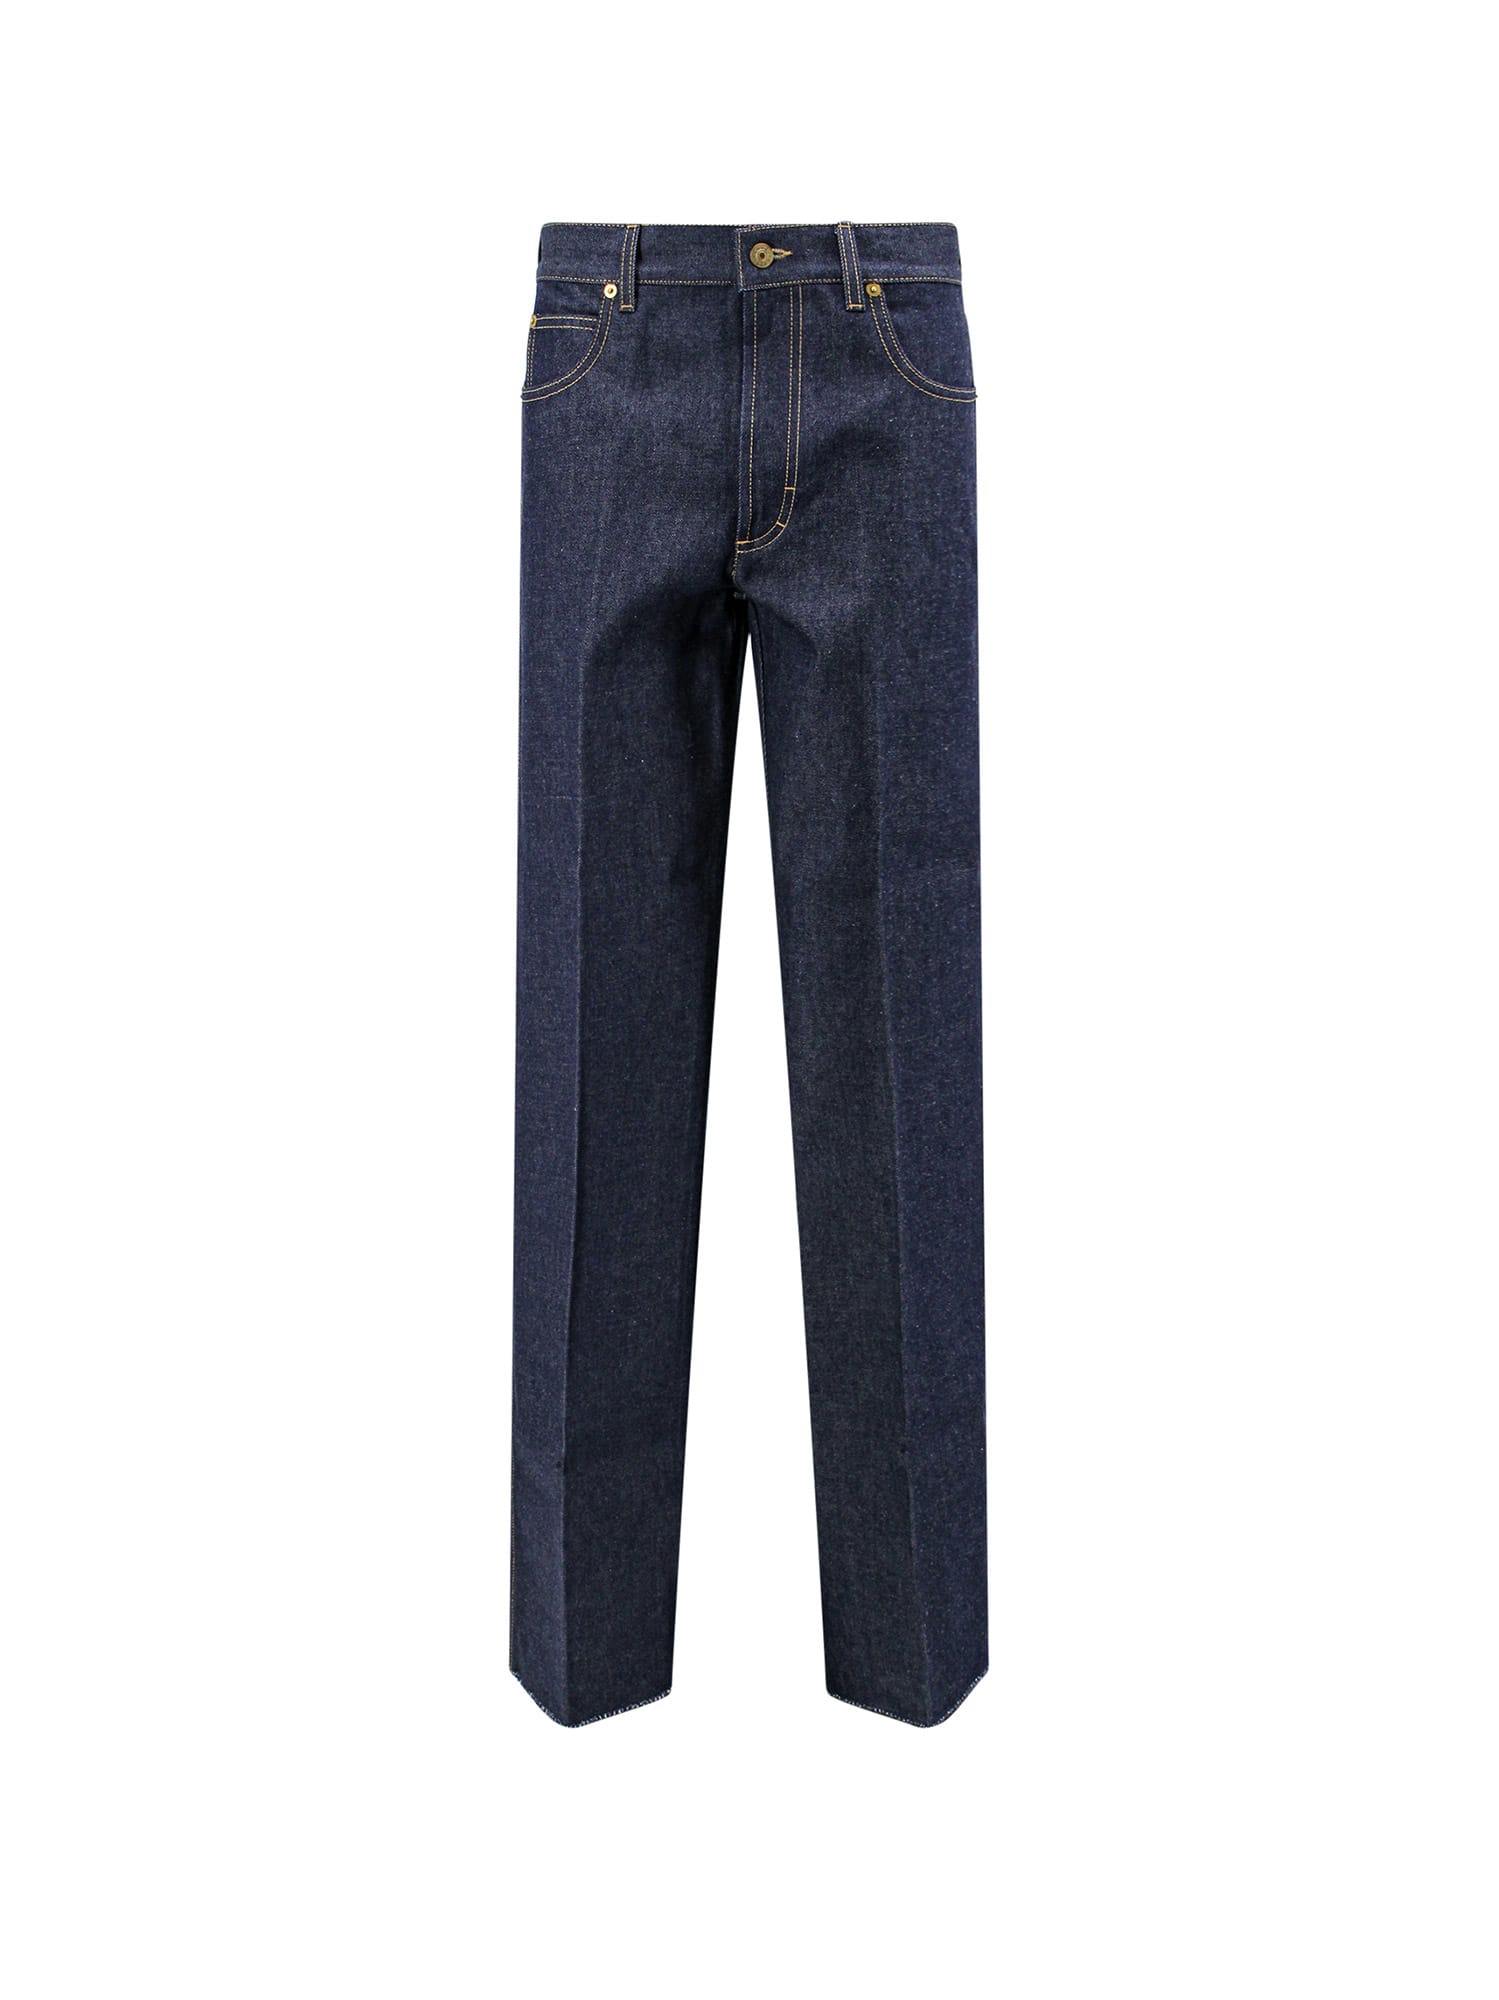 Regular fit denim jeans by Gucci | Tessabit